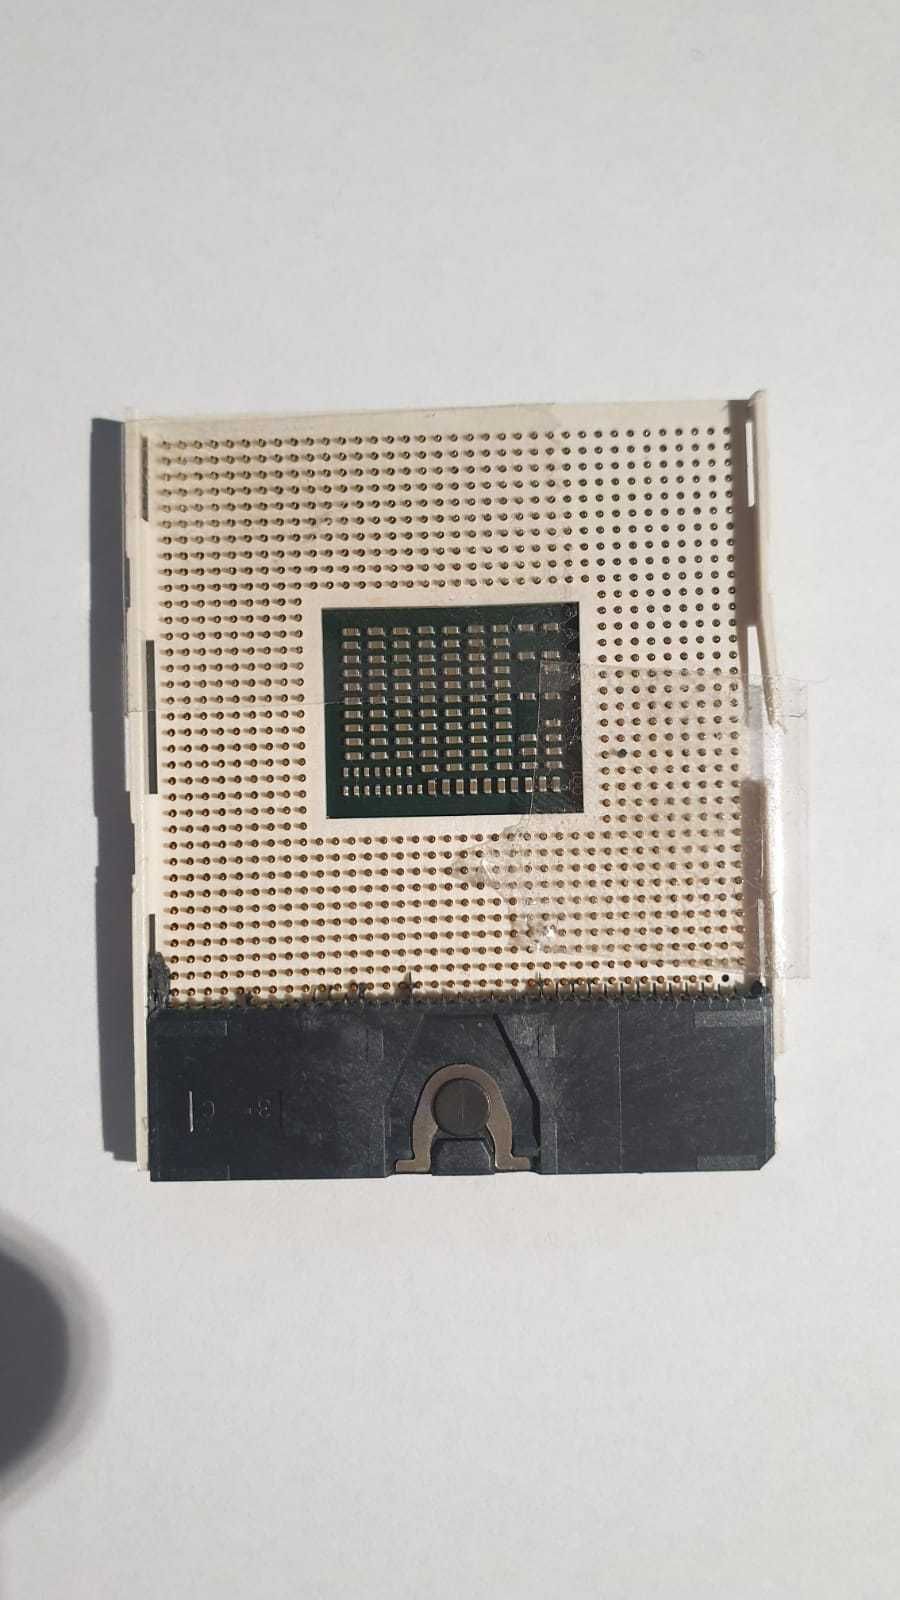 Procesor Laptop - Intel® Pentium® Processor B960 2M Cache, 2.20 GHz